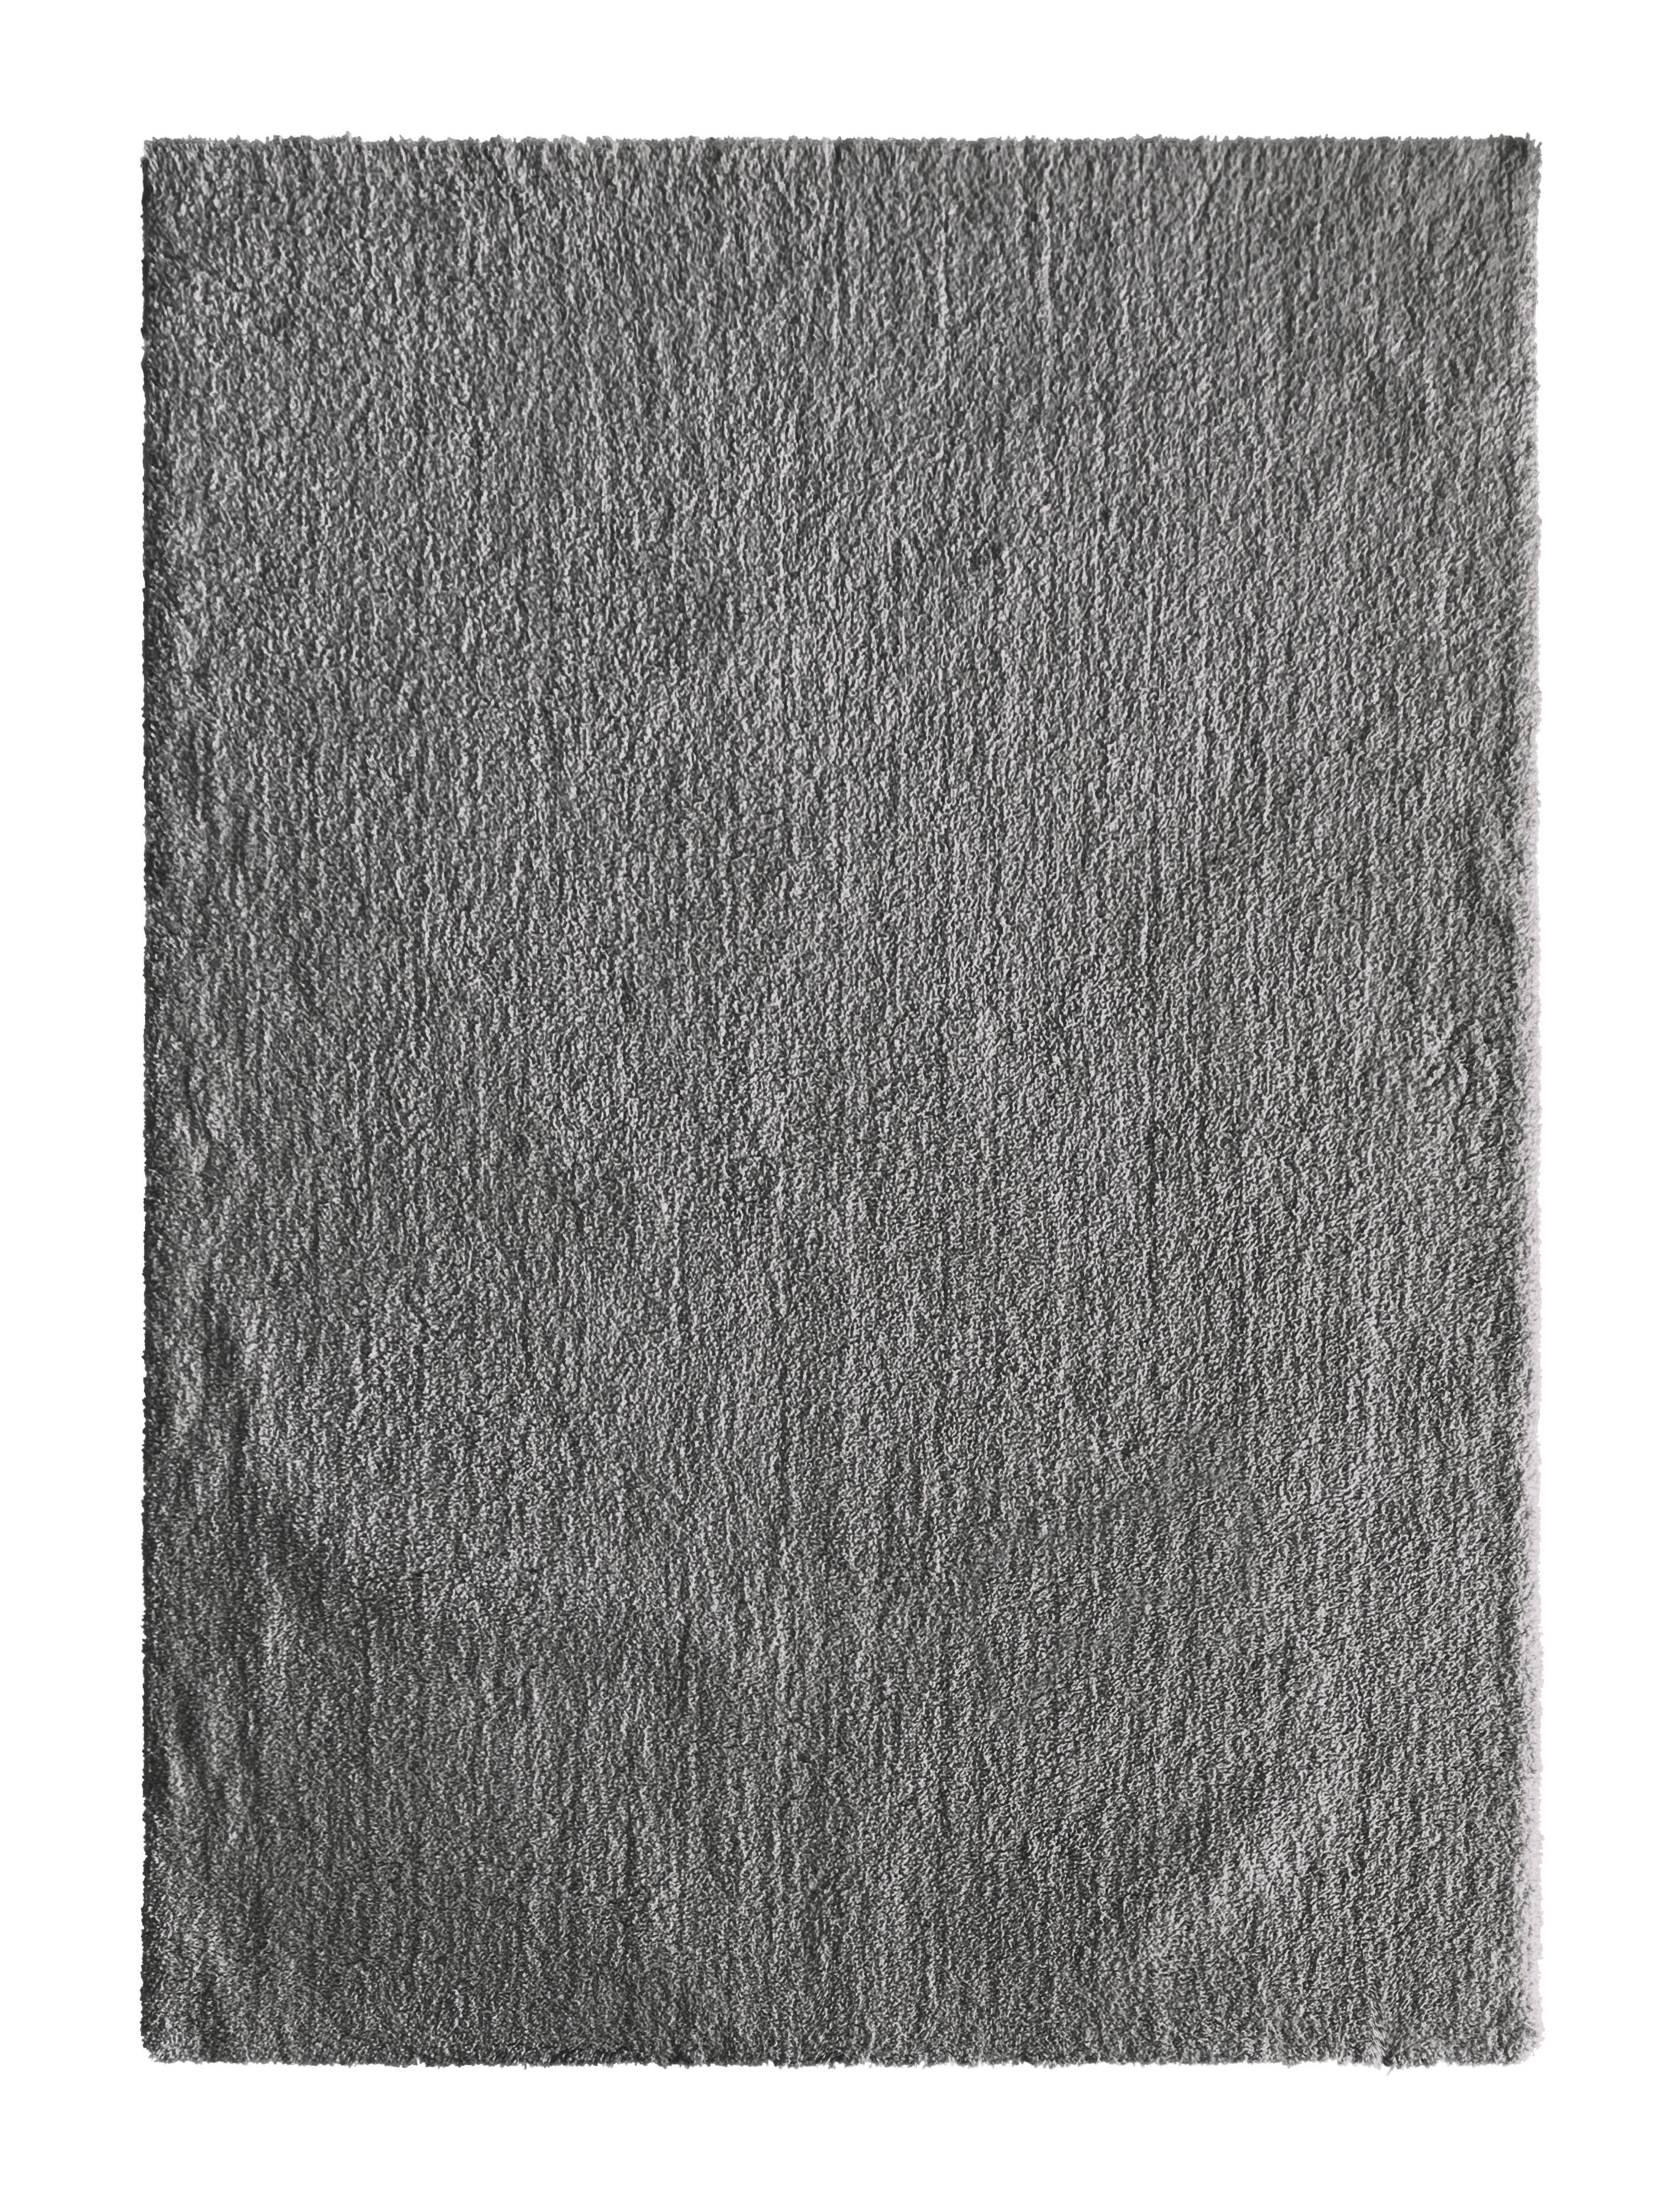 Hochflorteppich Kira 3 - Grau, MODERN, Textil (200/290cm) - Luca Bessoni